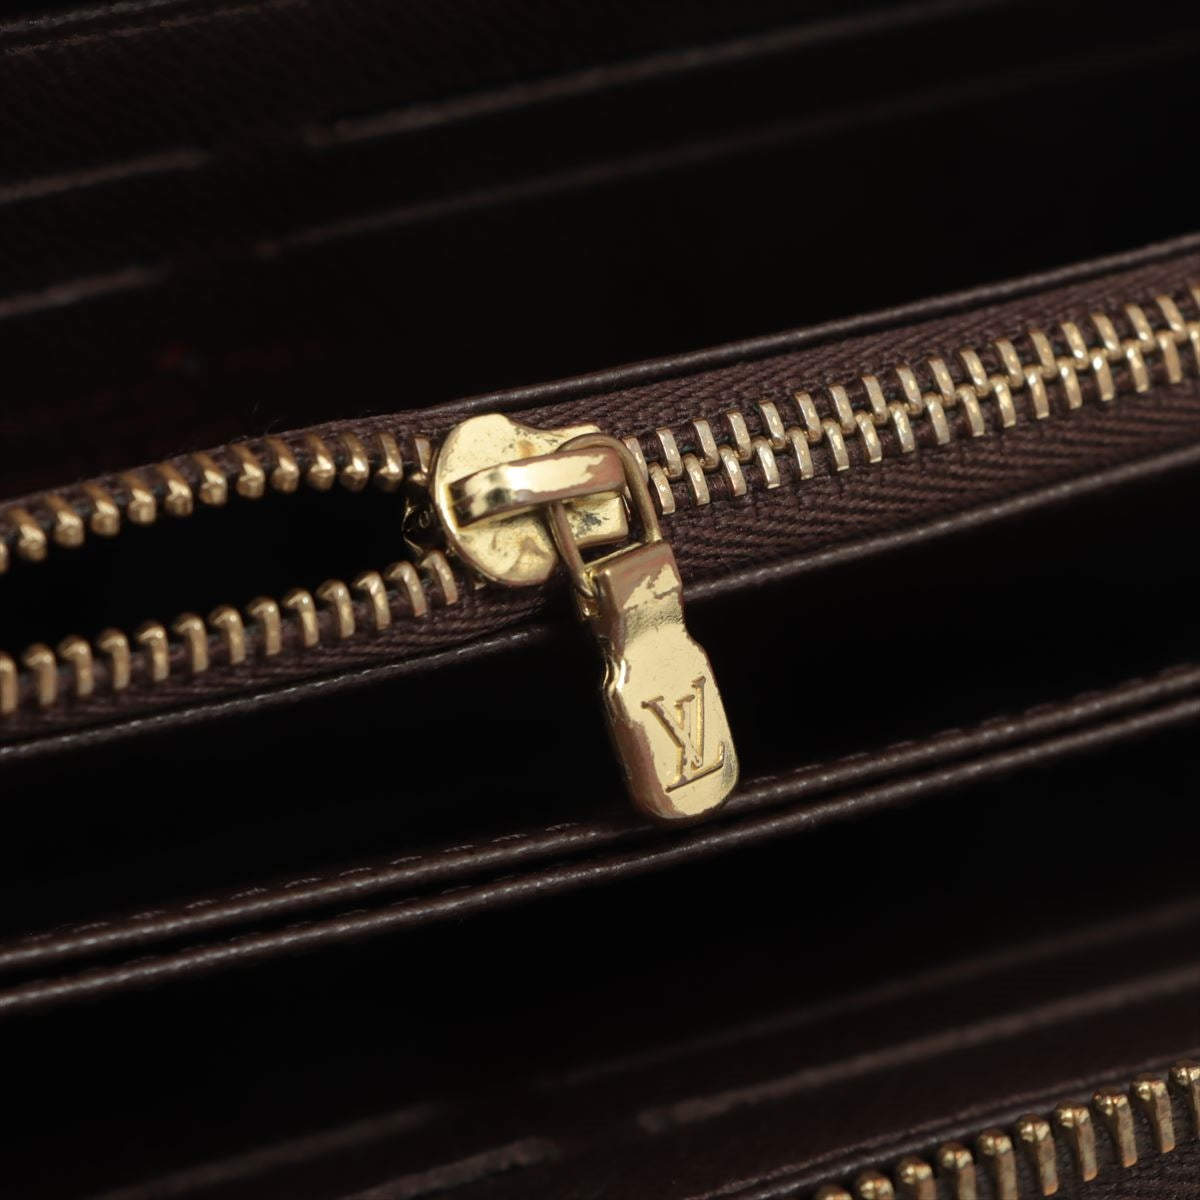 Louis Vuitton Suhali Leather Zippy Compact Wallet - Black Wallets